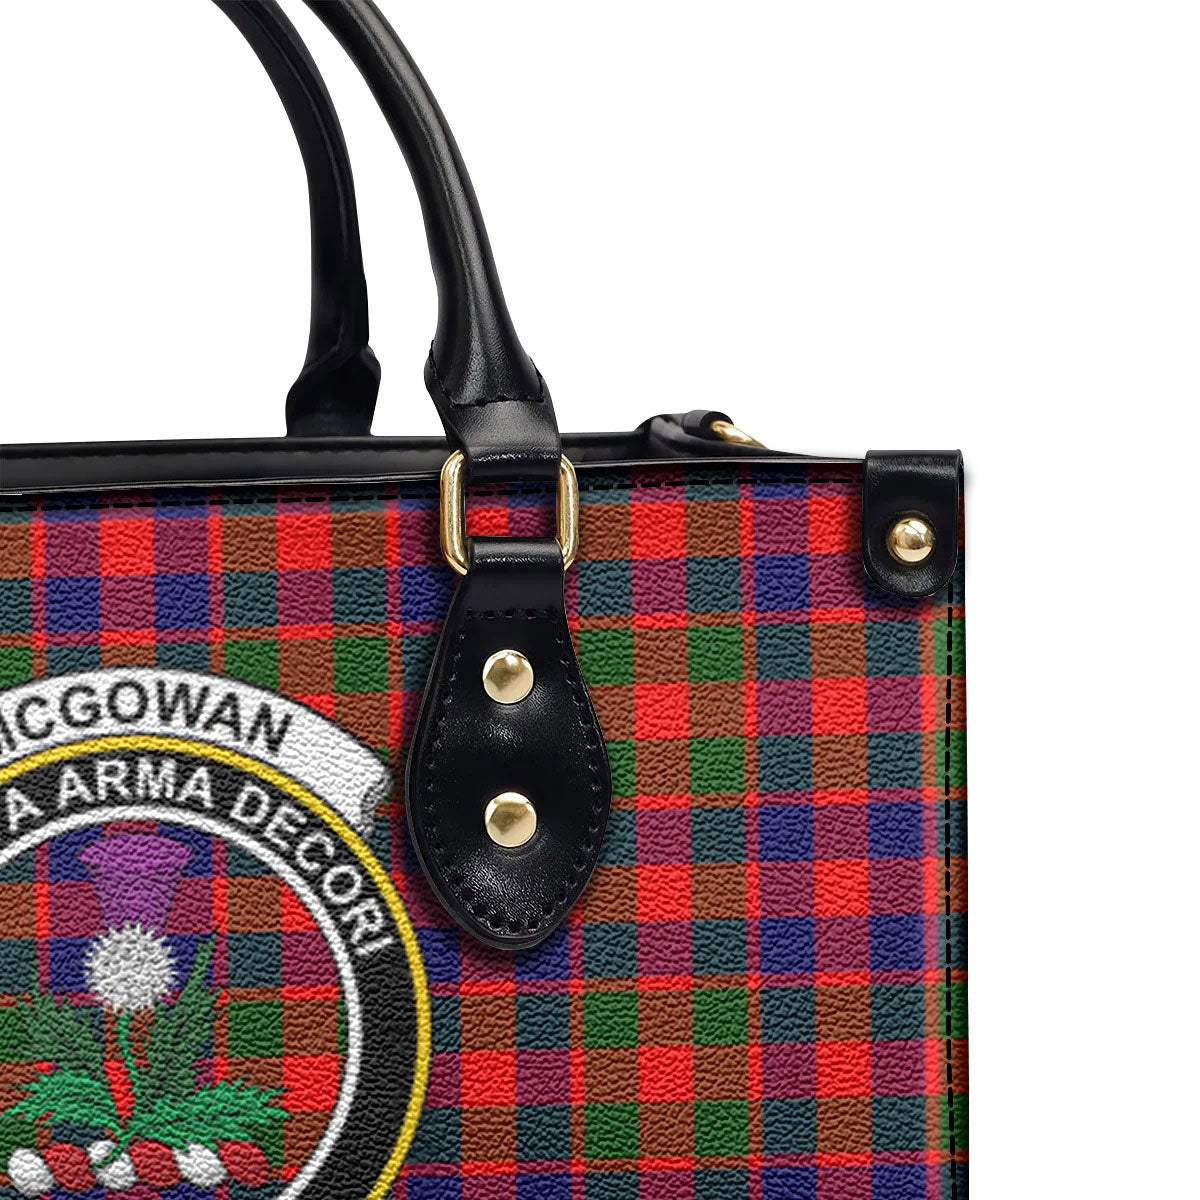 McGowan Tartan Crest Leather Handbag